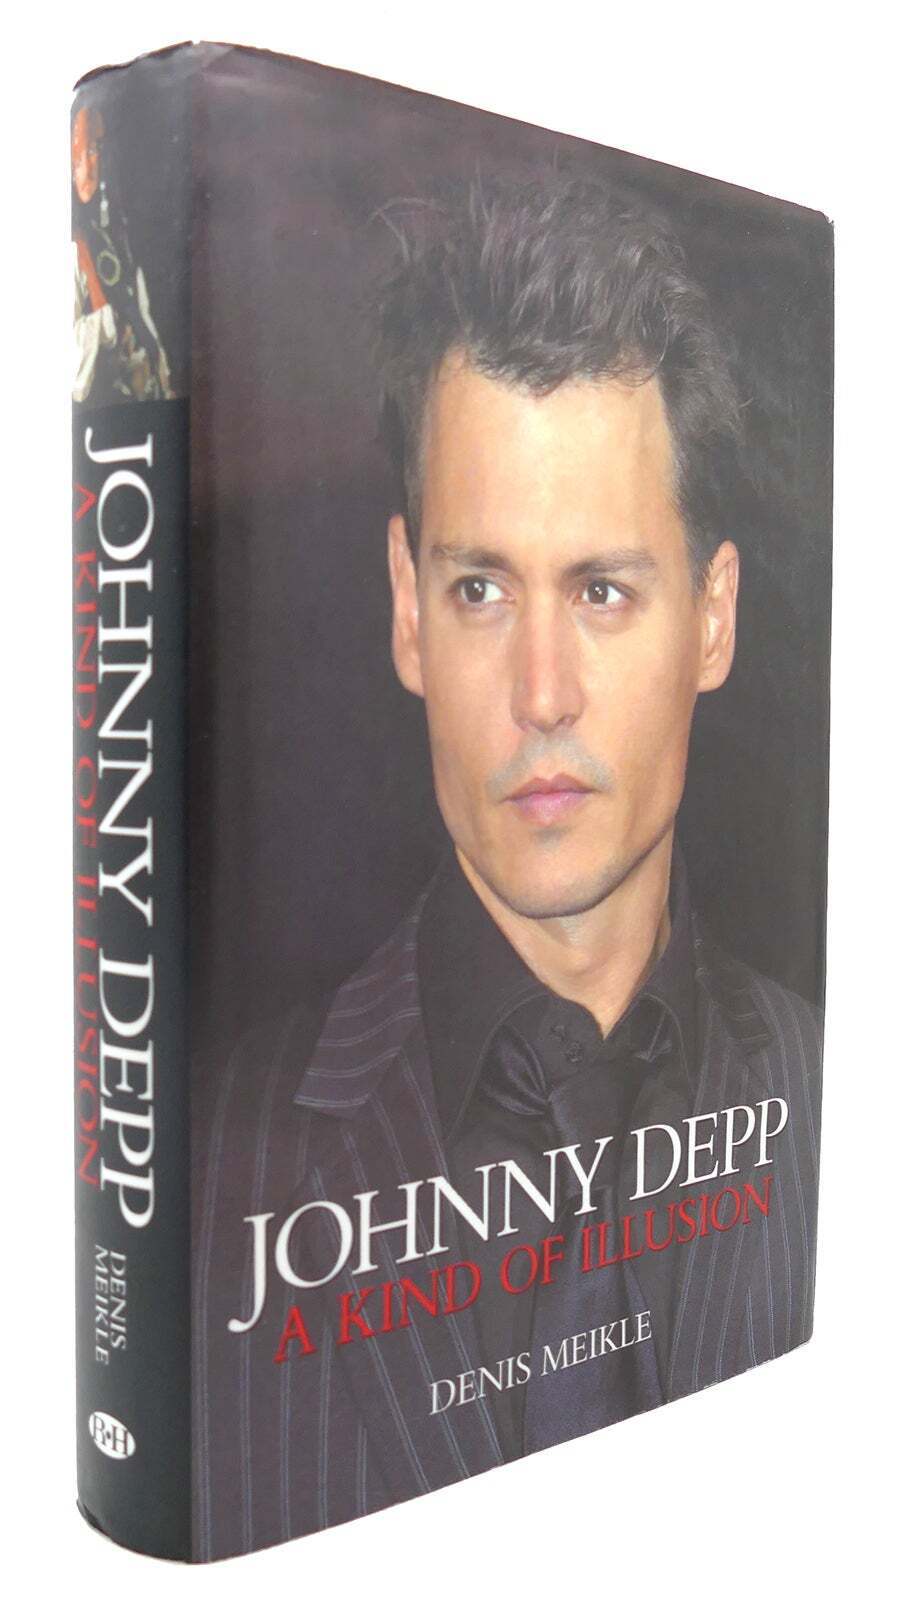 Denis Meikle JOHNNY DEPP A Kind of Illusion 1st Edition 1st Printing